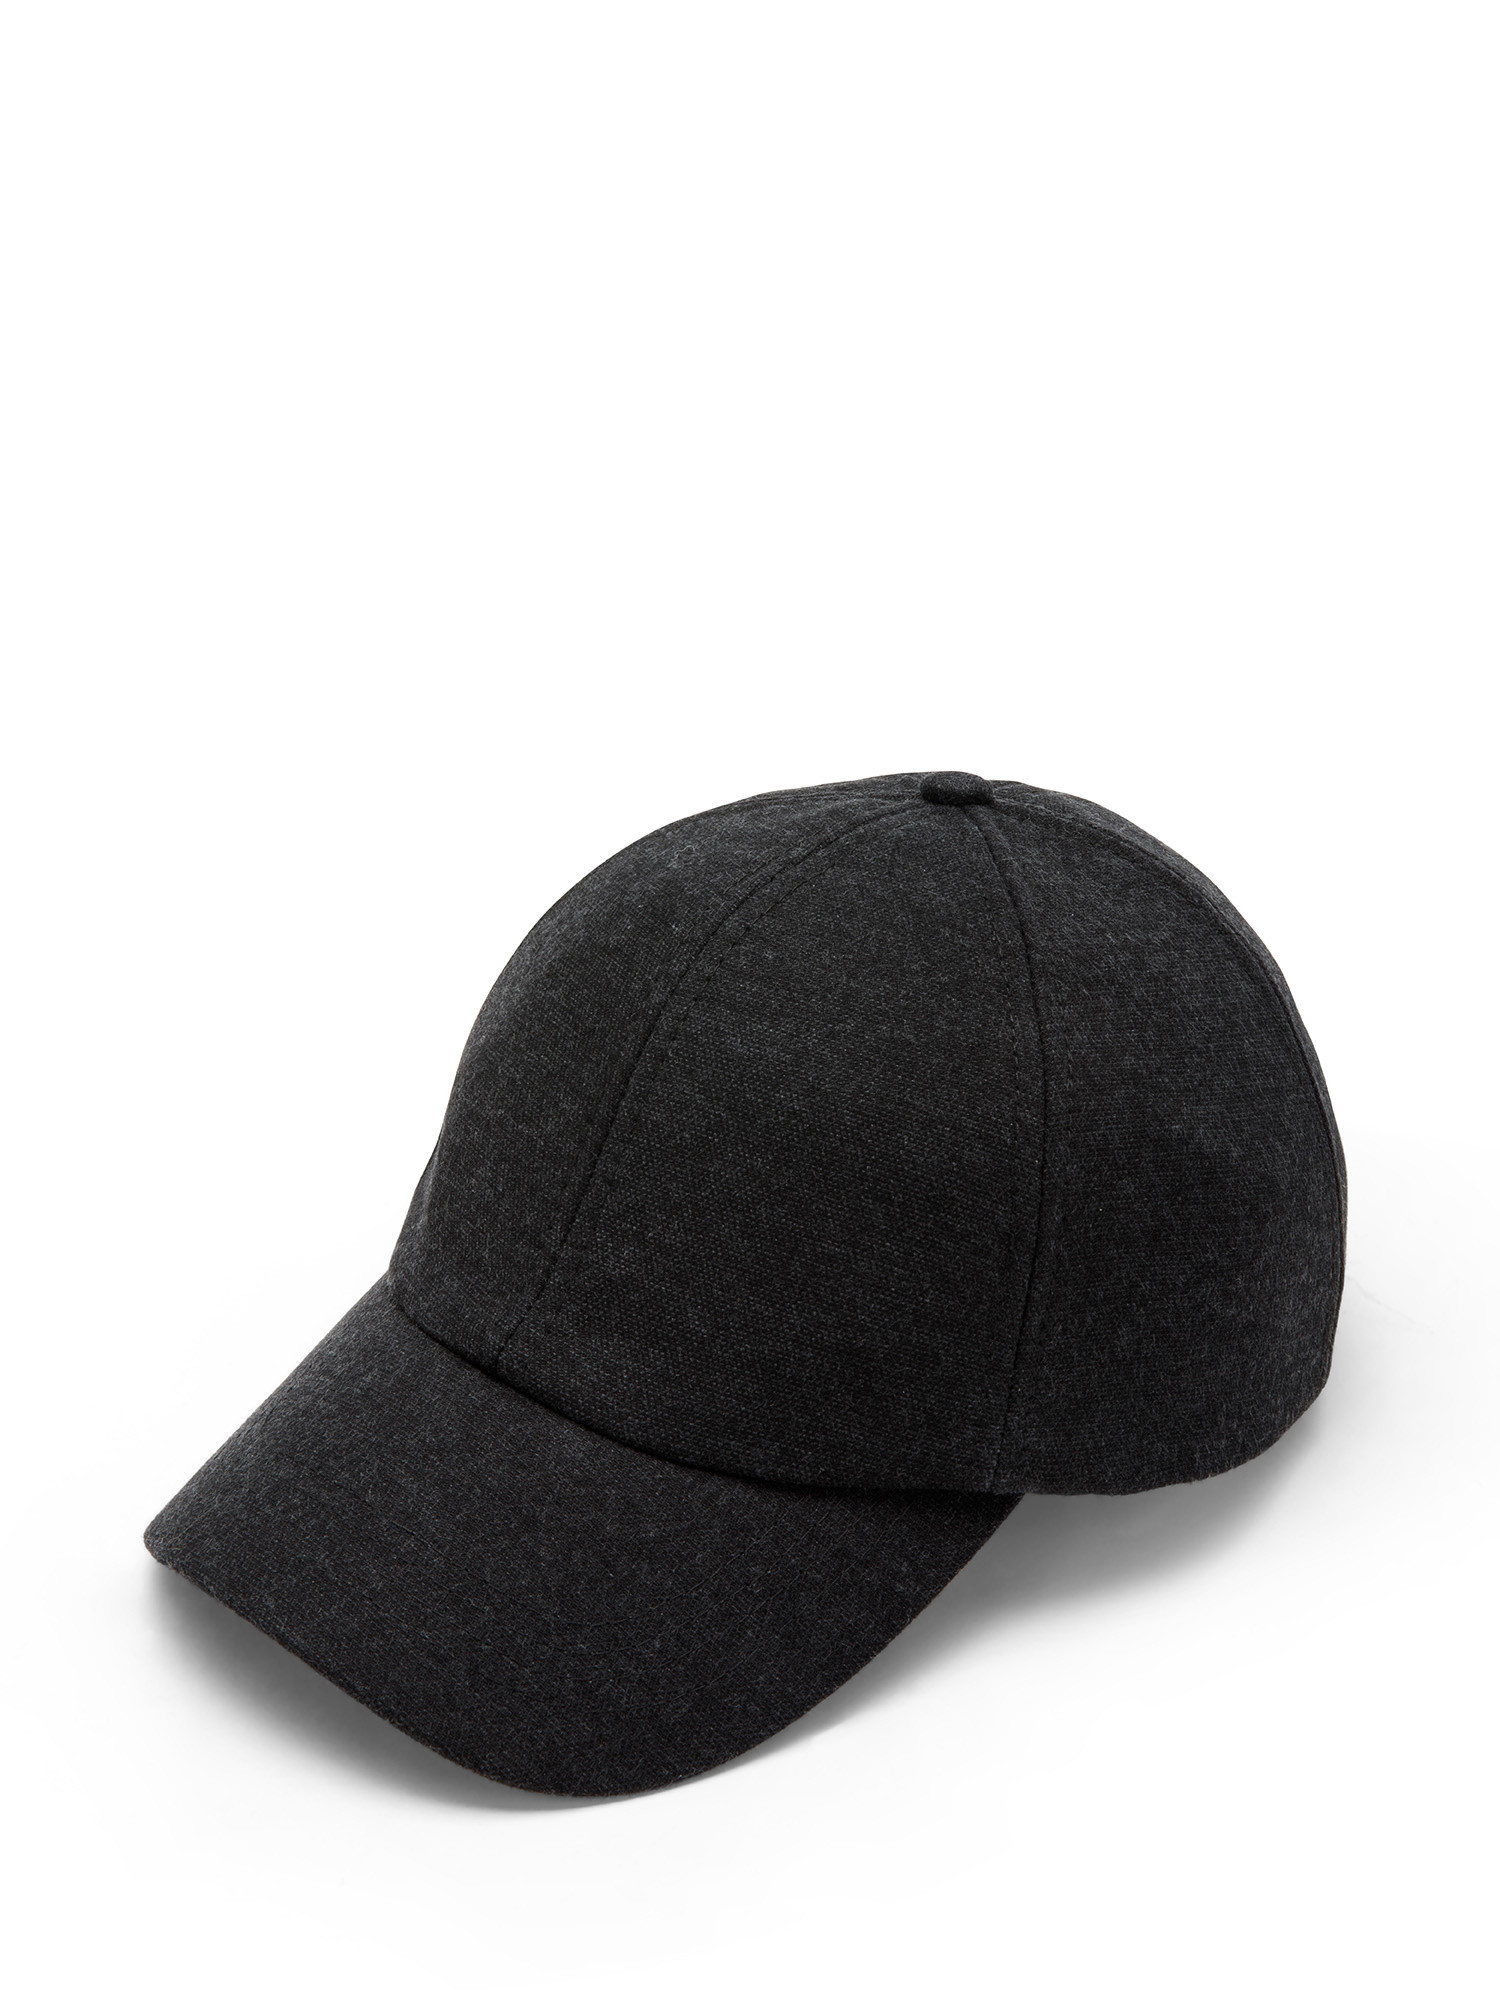 Luca D'Altieri - Baseball cap, Black, large image number 0